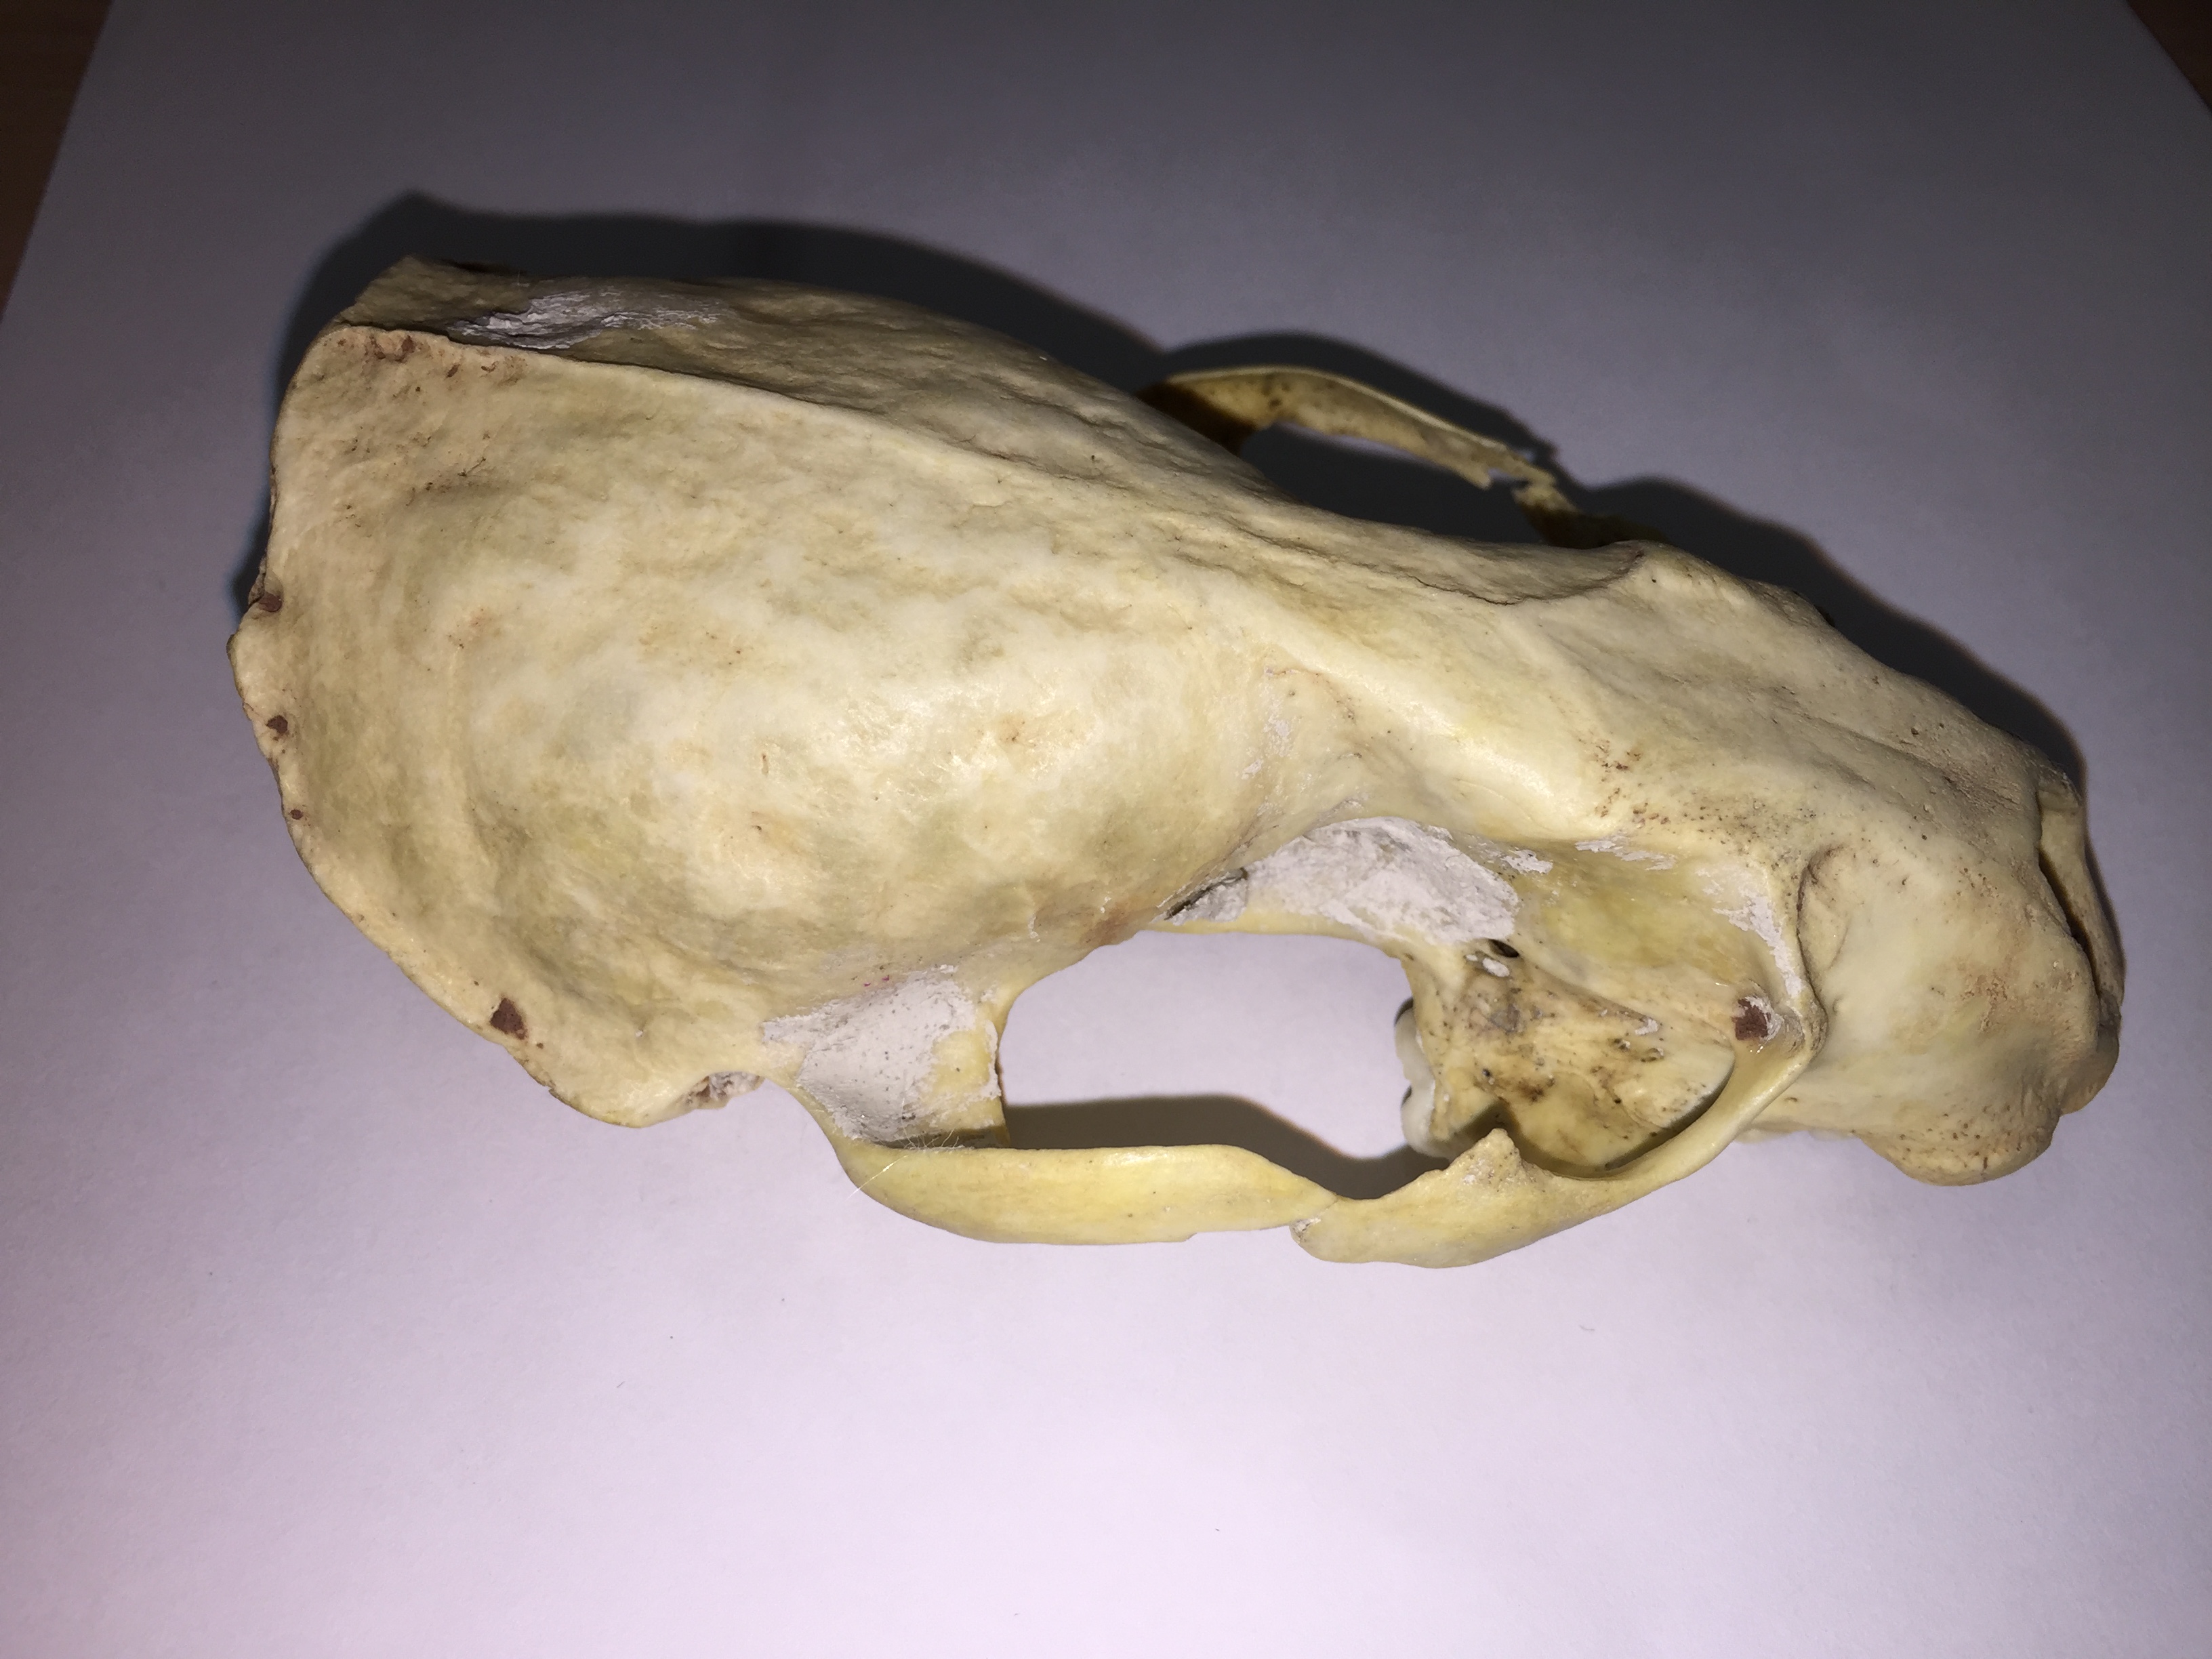 NaturePlus: What is this animal skull ?